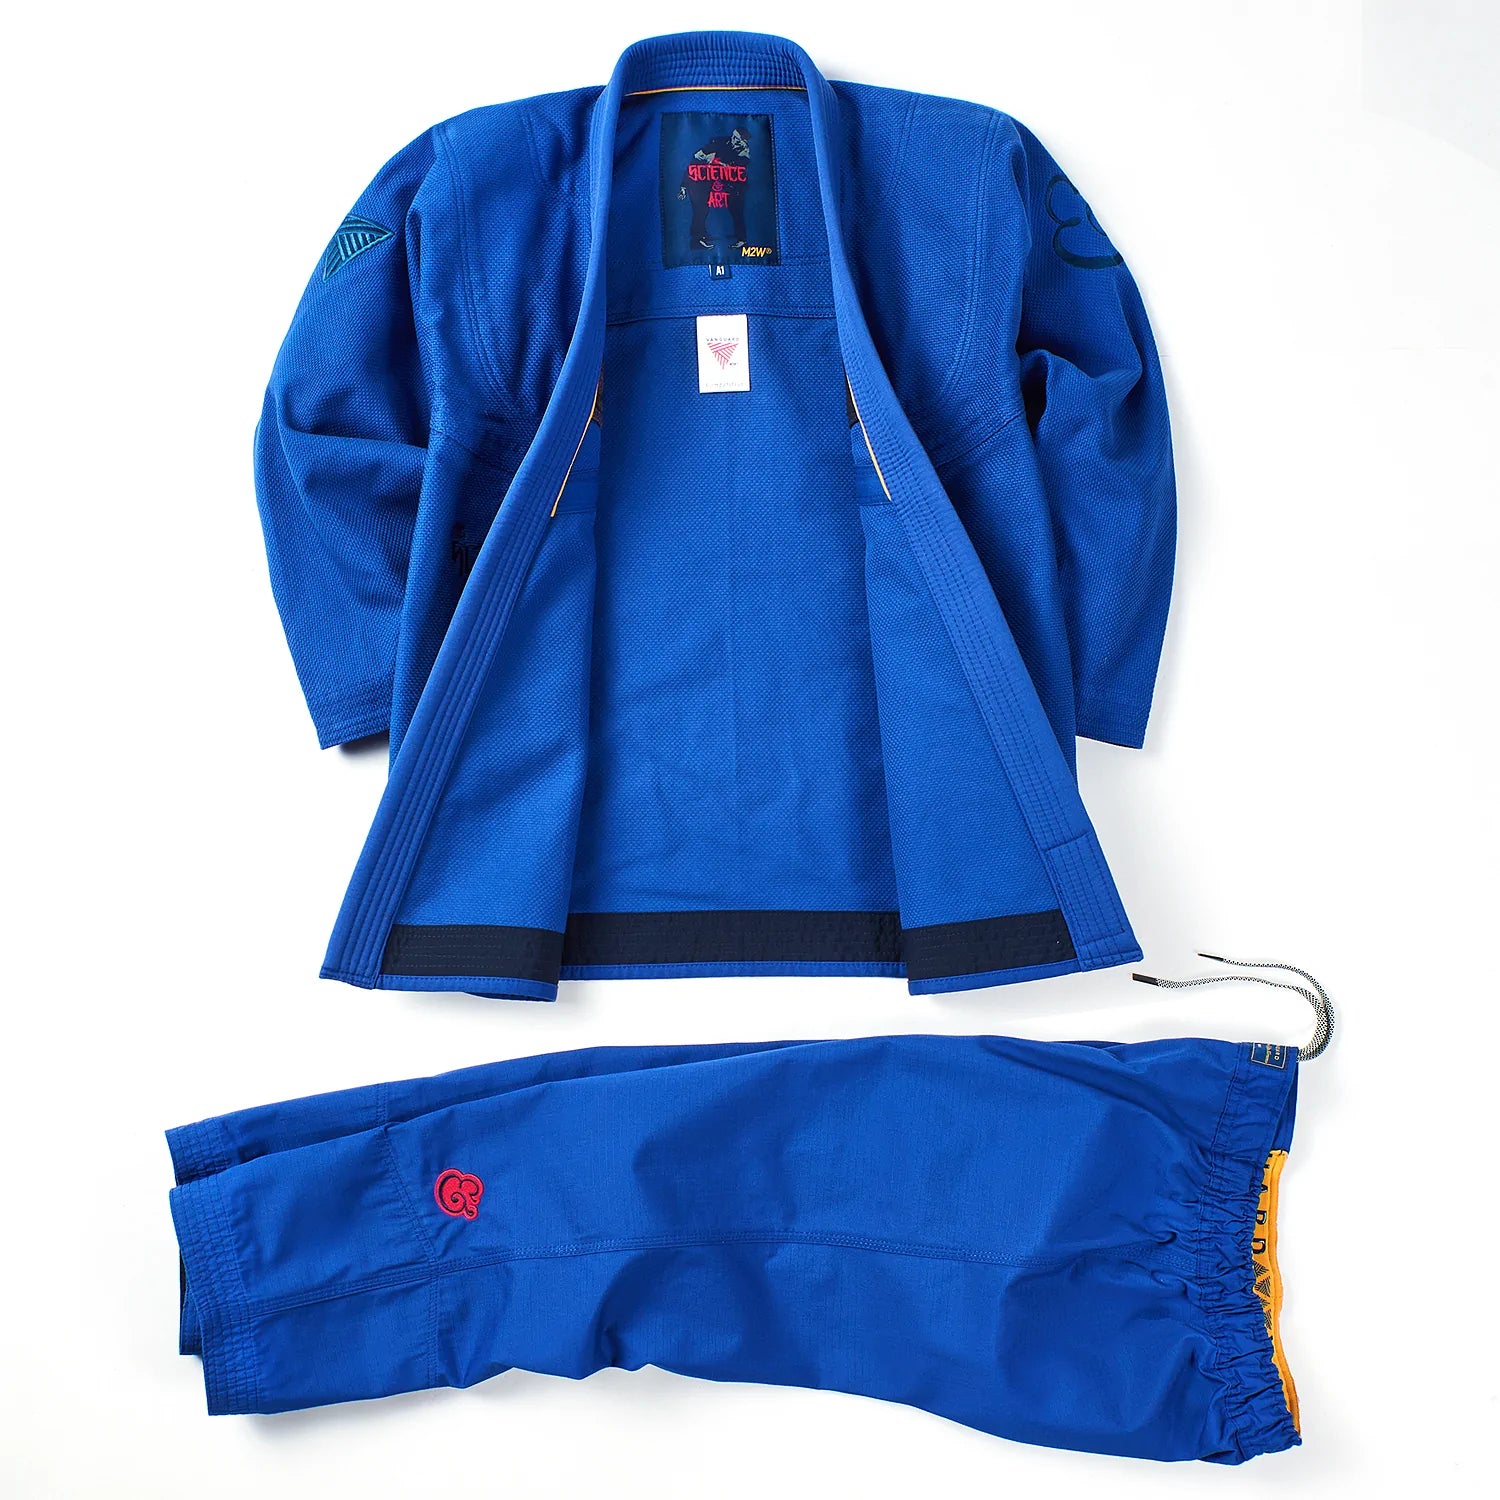 柔術AESTHETIC / THE PURE LEGACY 柔術衣 BLUE-